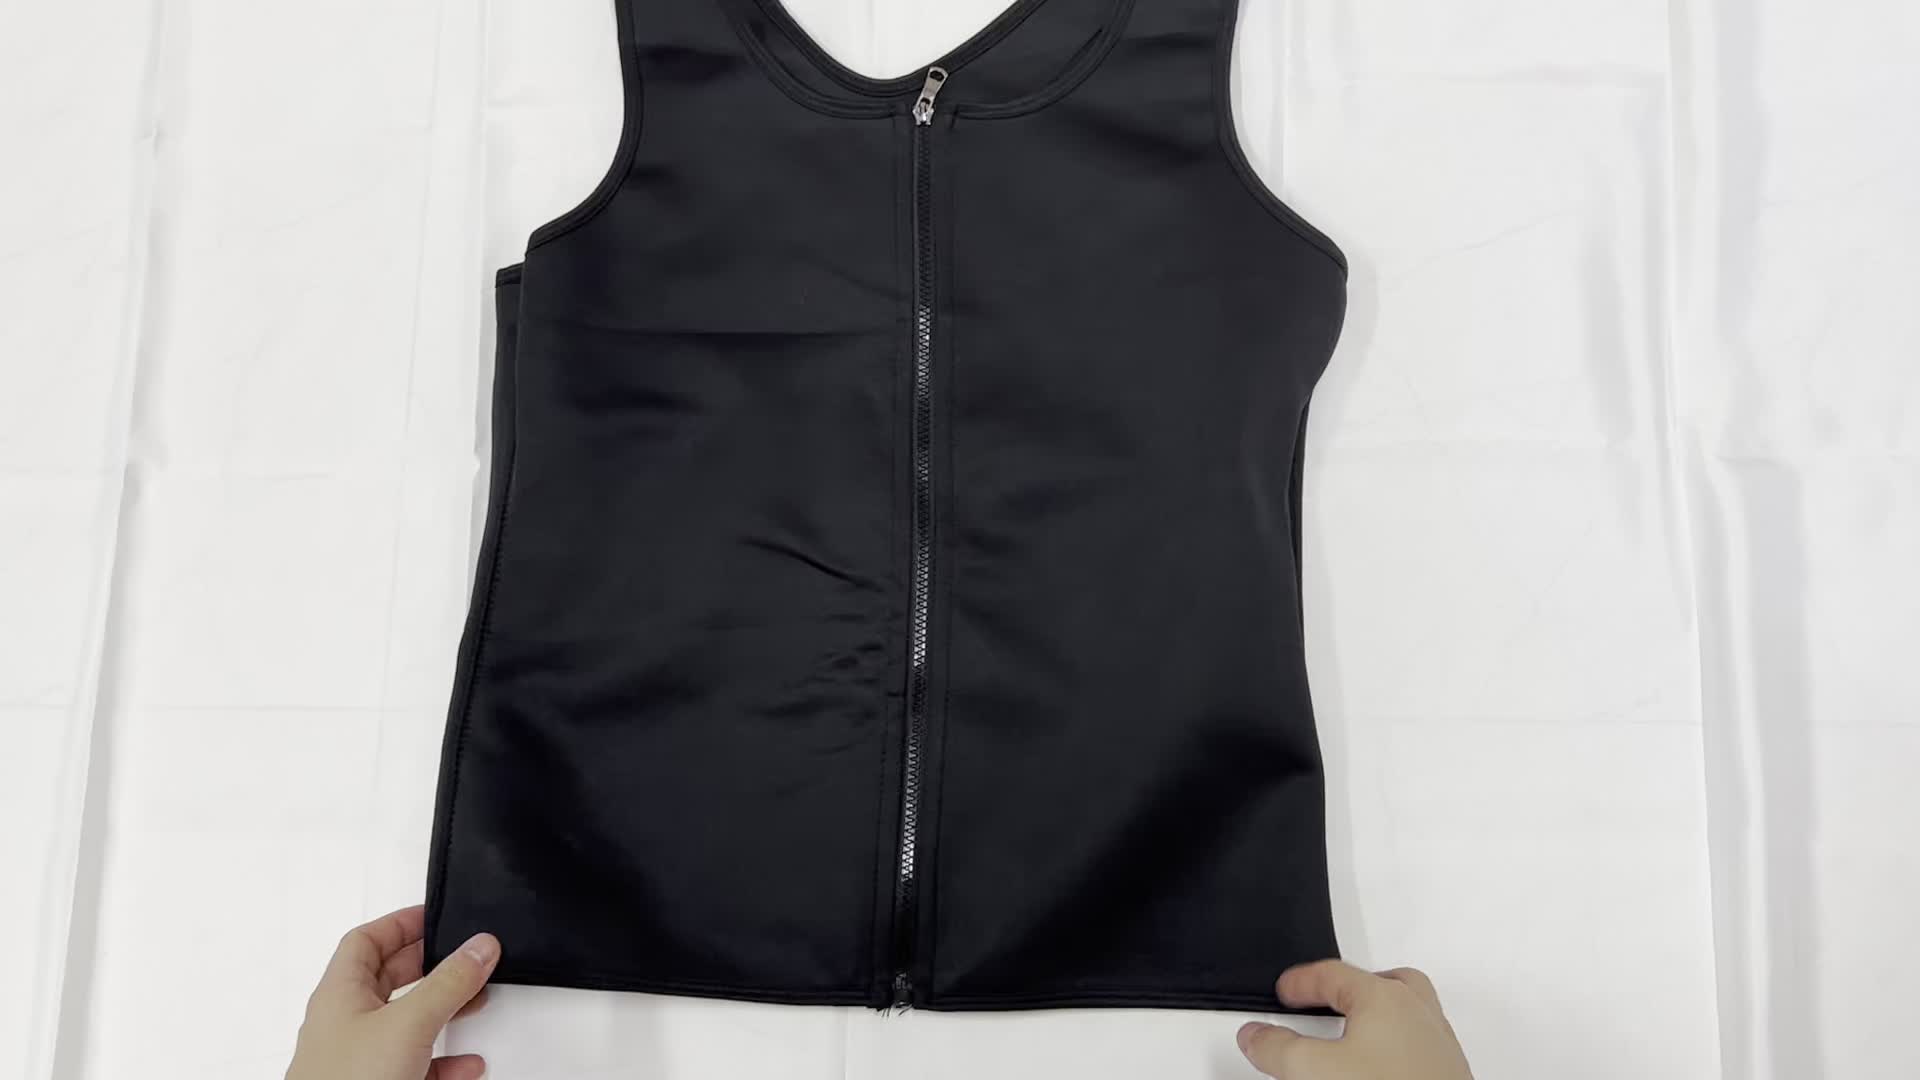 Men Body Shaper Slimming Vest Tight Tank Top Compression Shirt Tummy  Control Underwear Moobs Binder